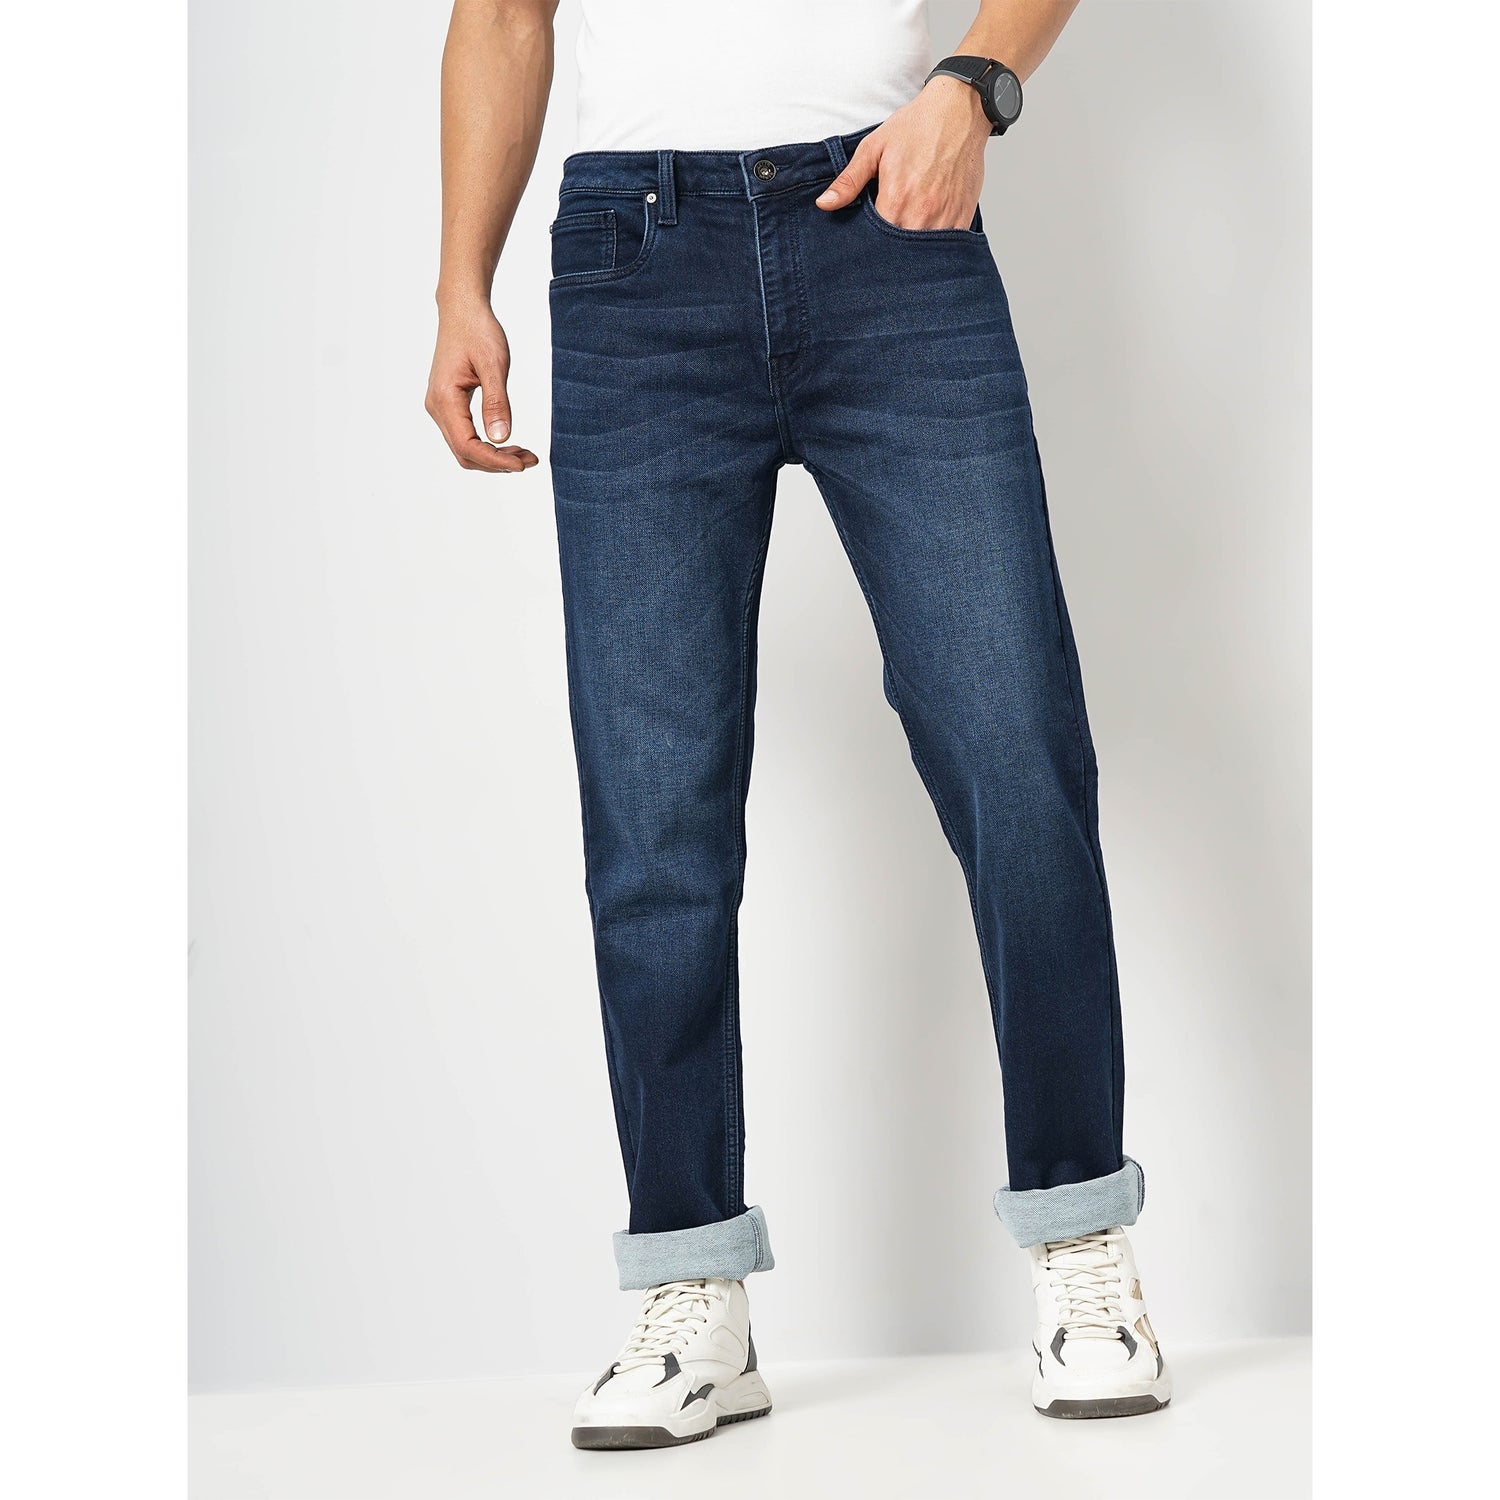 Men's Blue Solid Straight Fit Cotton Knit Denim Jeans (FOFIRSTSTL)